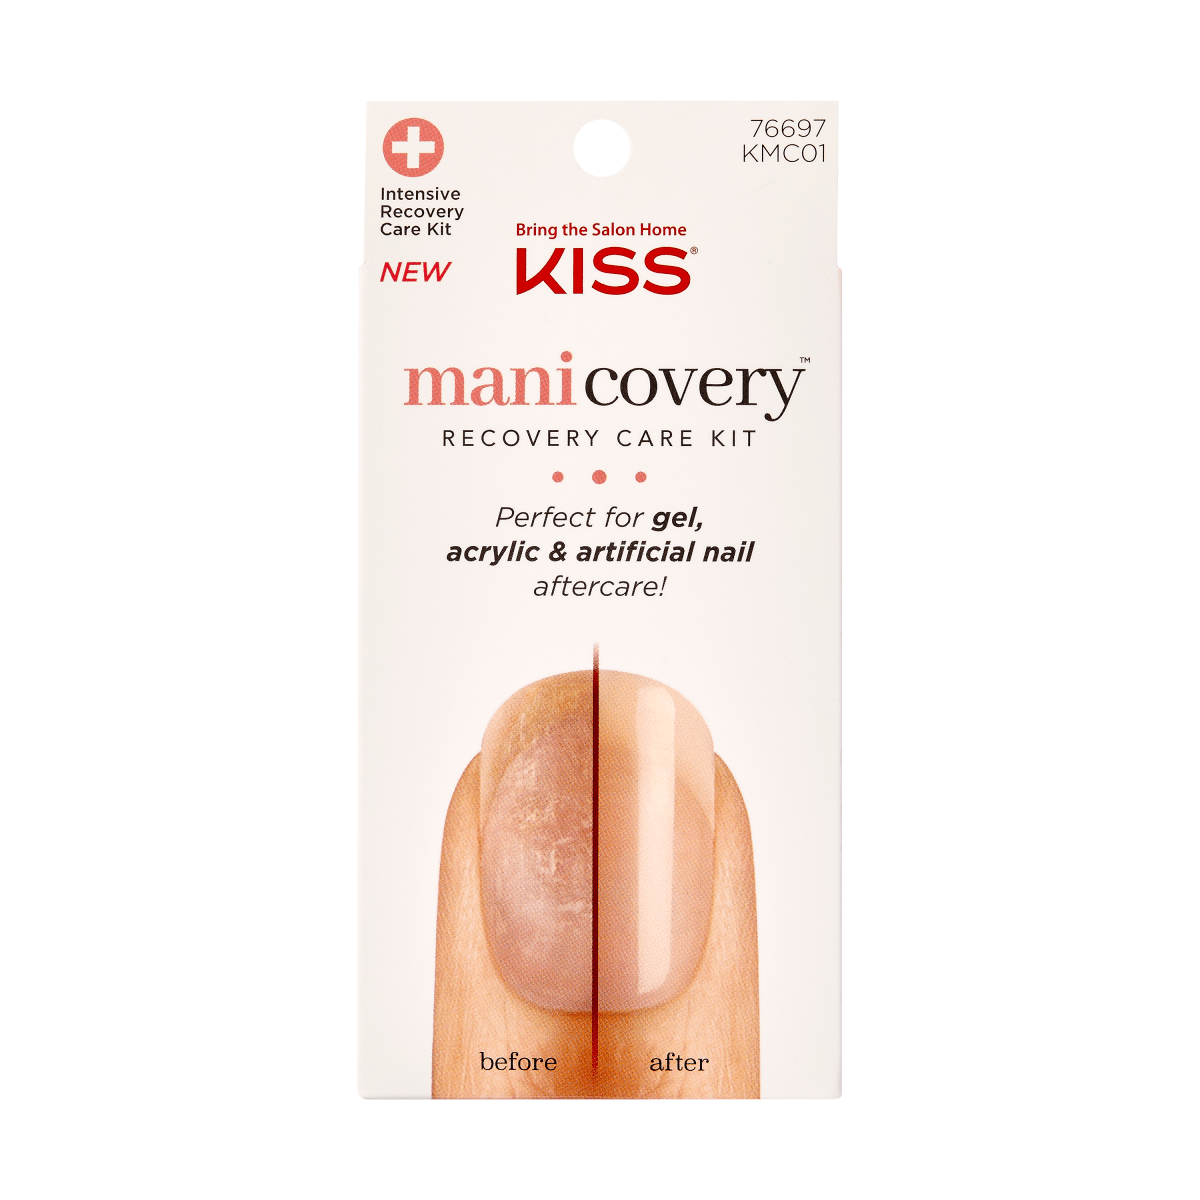 KISS Manicovery Treatment